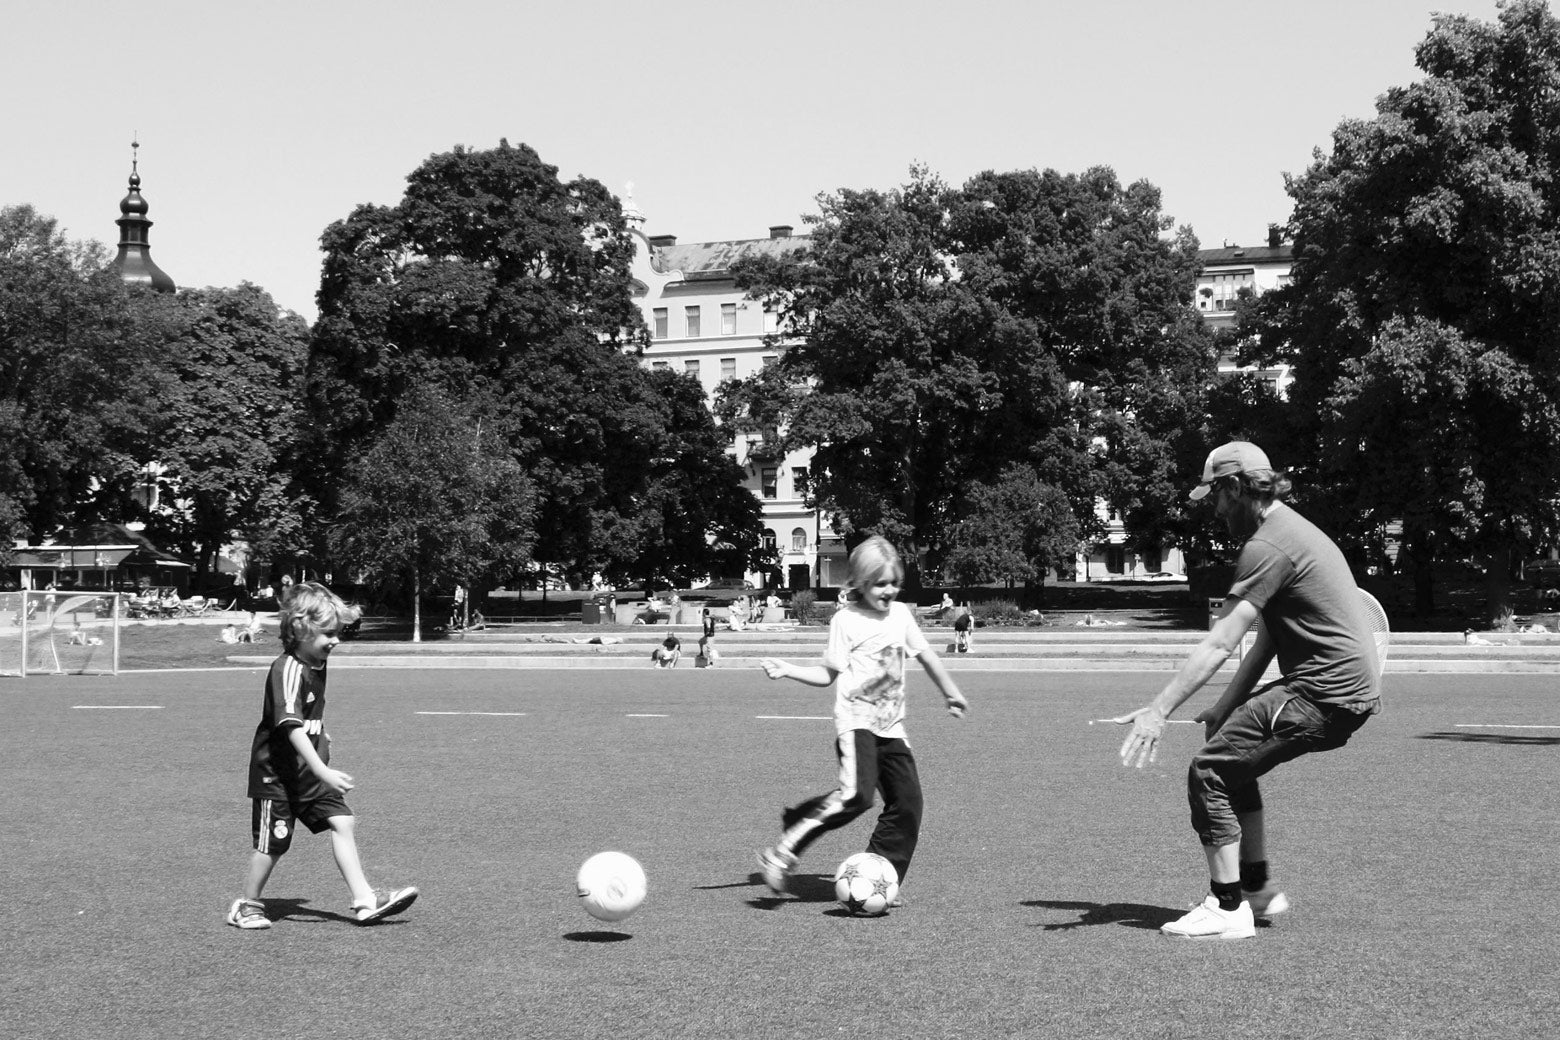 A family enjoys a game of soccer together in Vasaparken. 